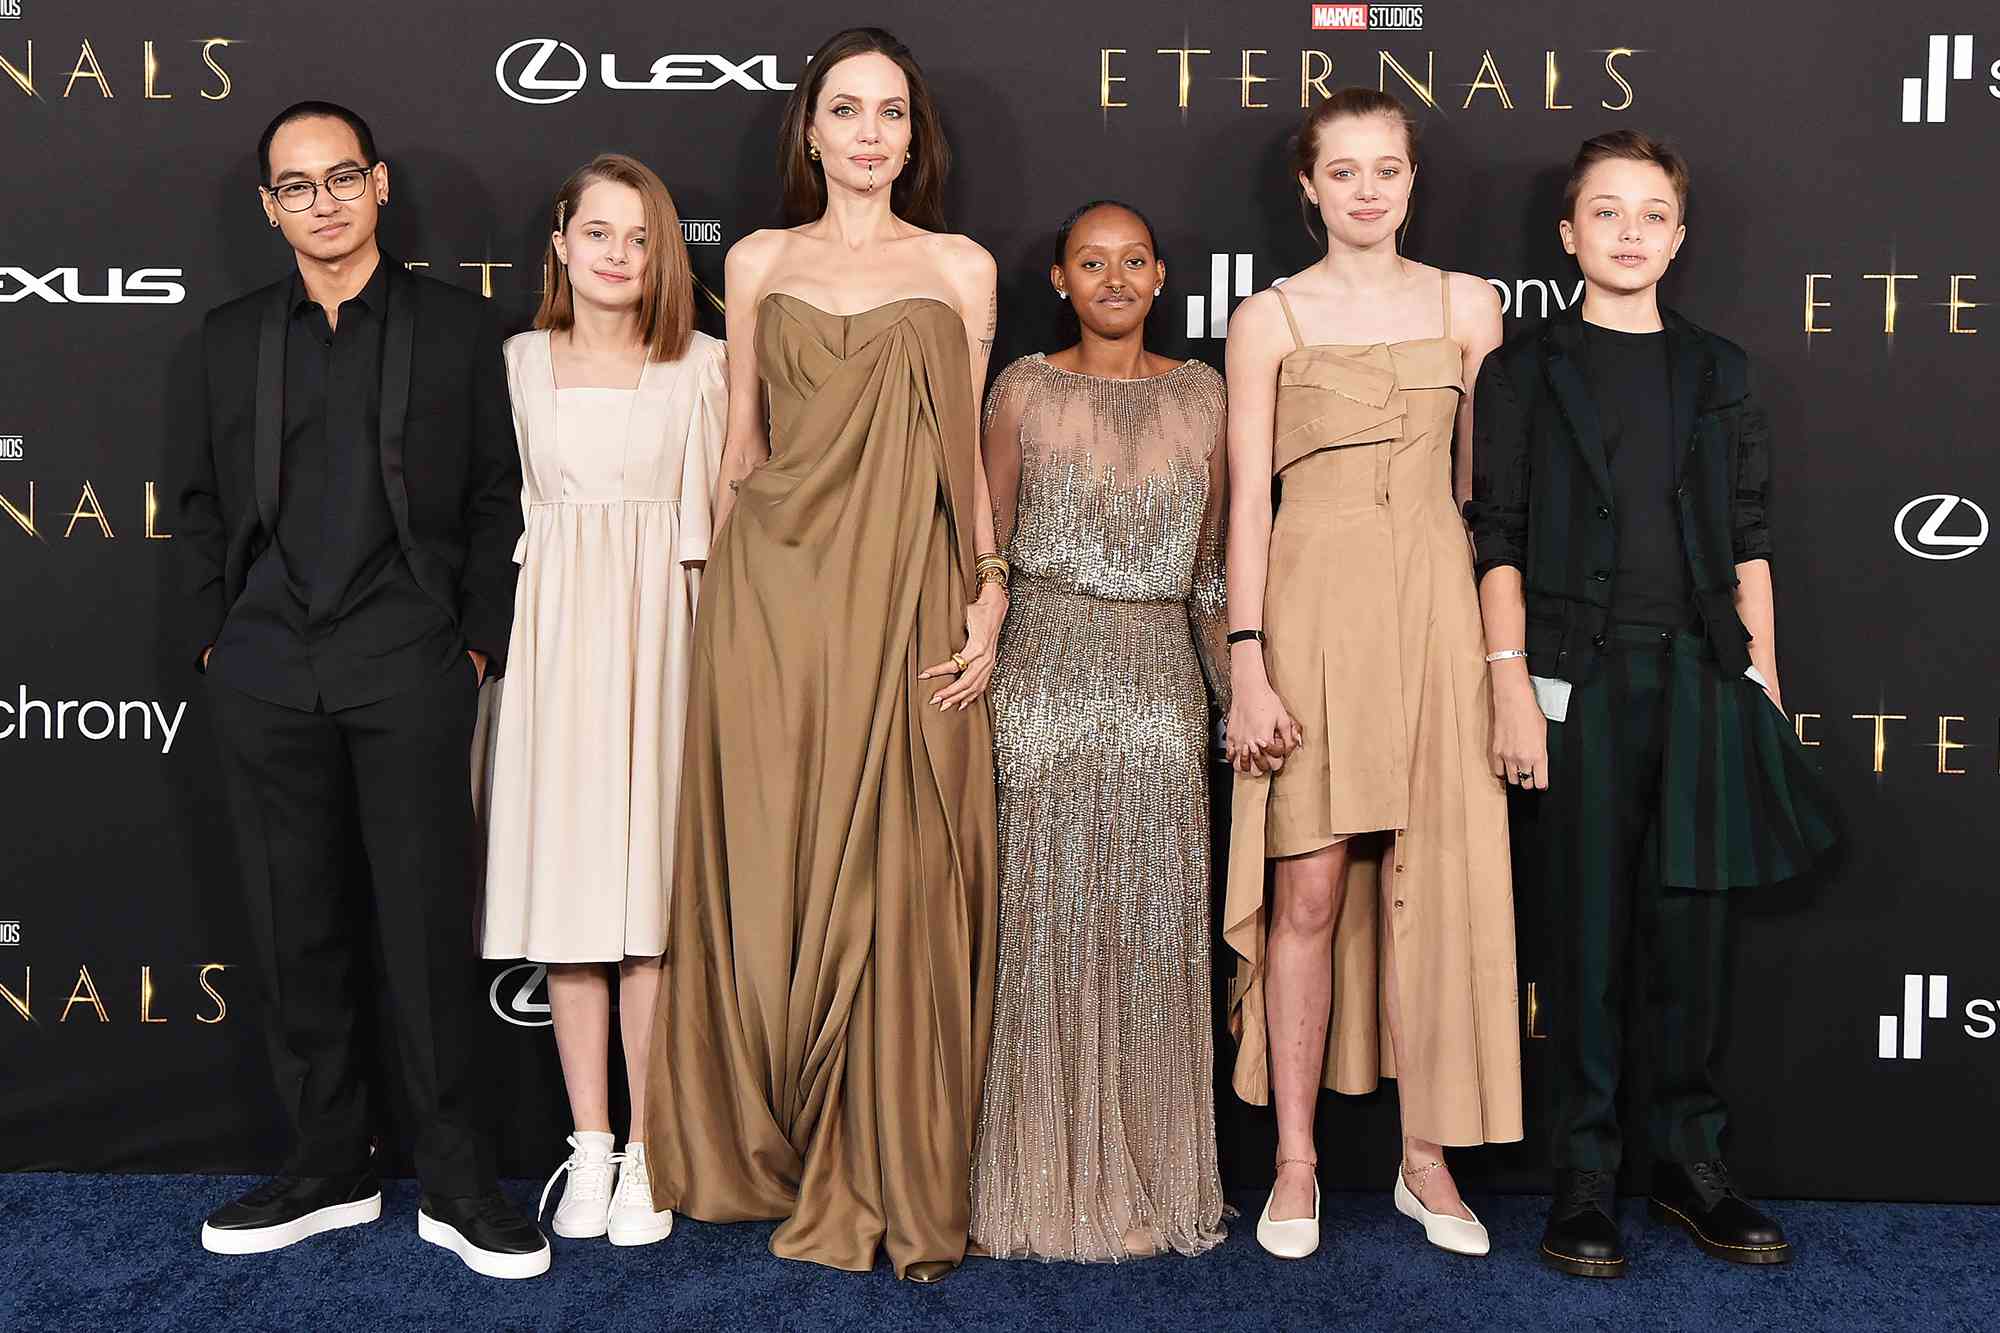 Maddox Jolie-Pitt, Vivienne Jolie-Pitt, Angelina Jolie, Knox Jolie-Pitt, Shiloh Jolie-Pitt, and Zahara Jolie-Pitt attend the Los Angeles Premiere of Marvel Studios' "Eternals" on October 18, 2021 in Los Angeles, California.